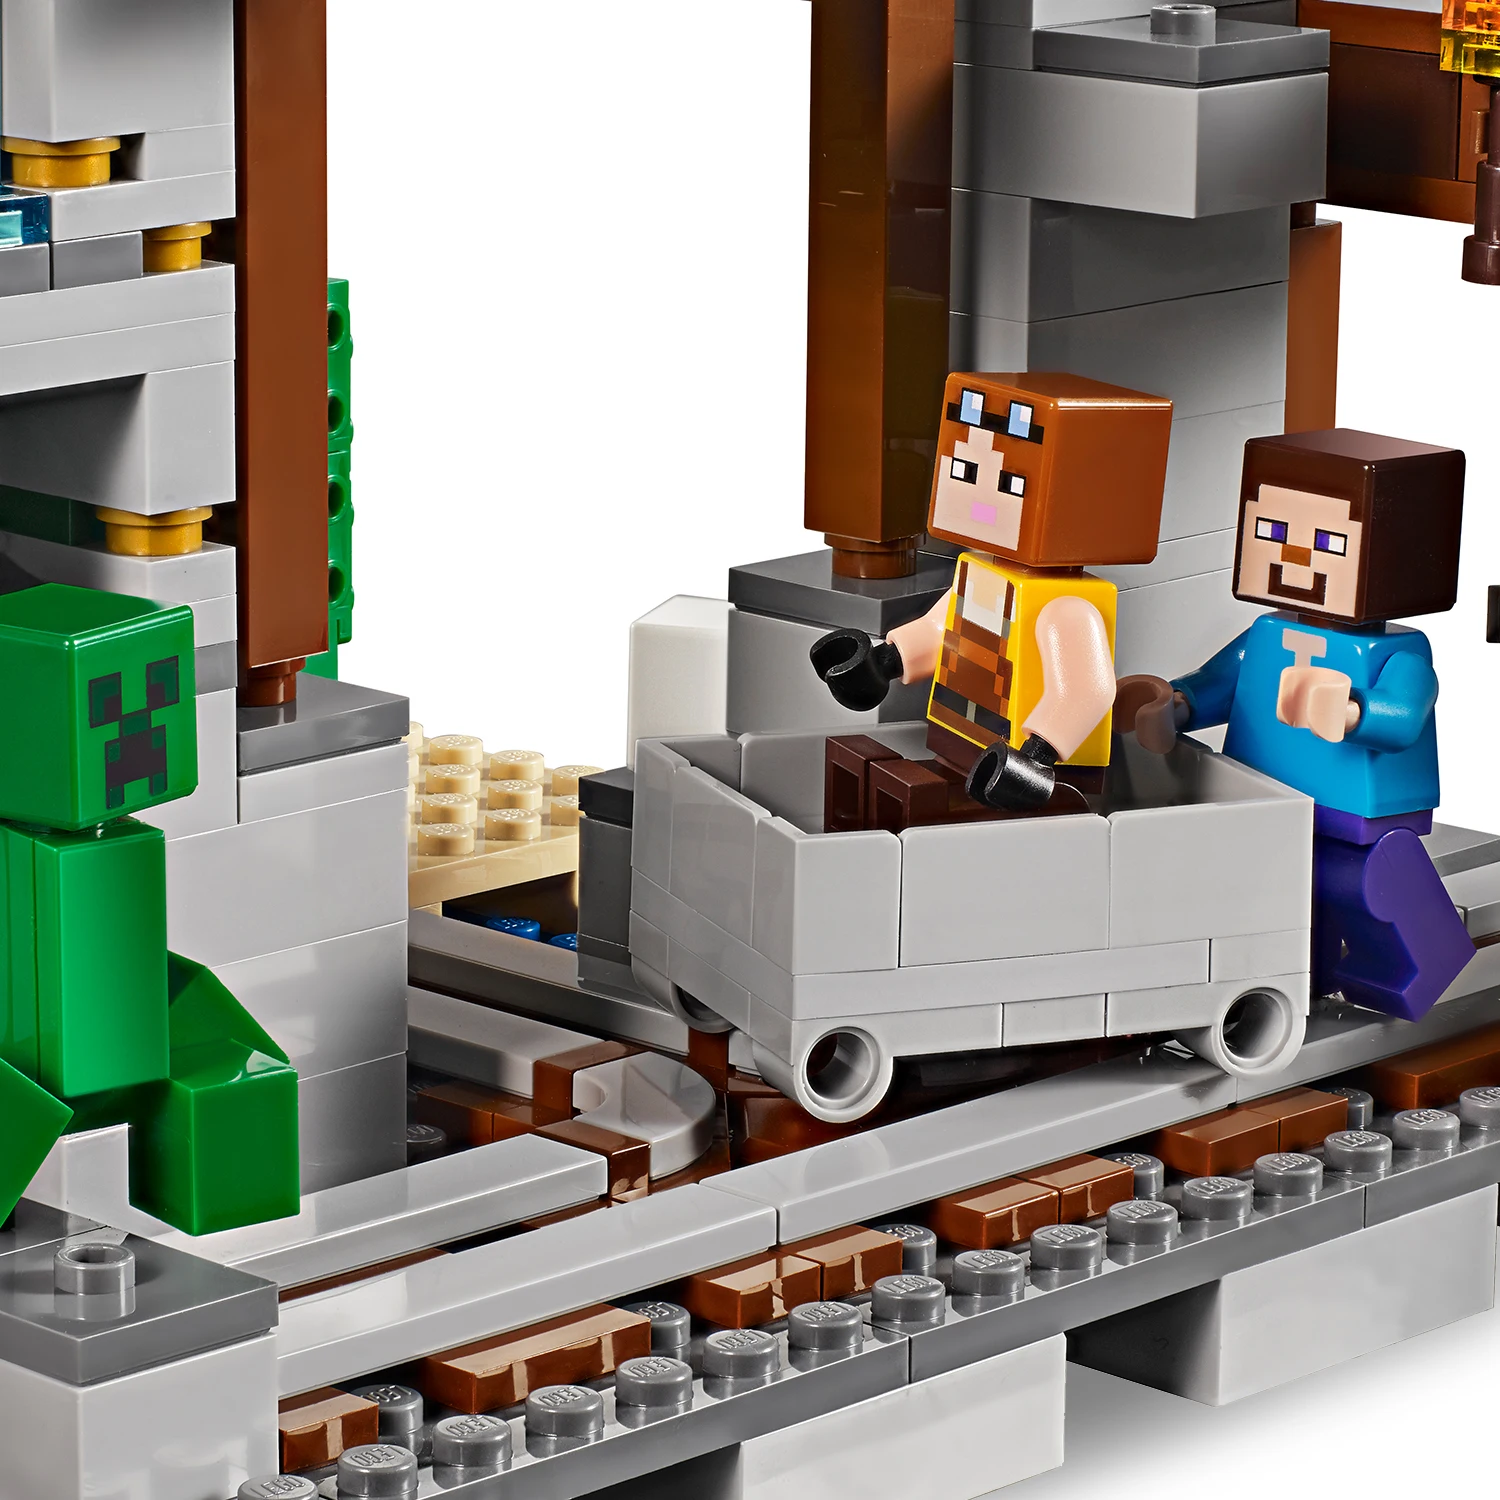 Lego Original Minecraft | The Mine™| Video Game Based Blacksmith Shelter Construction Toy (21155) - Soft Plastic Blocks AliExpress